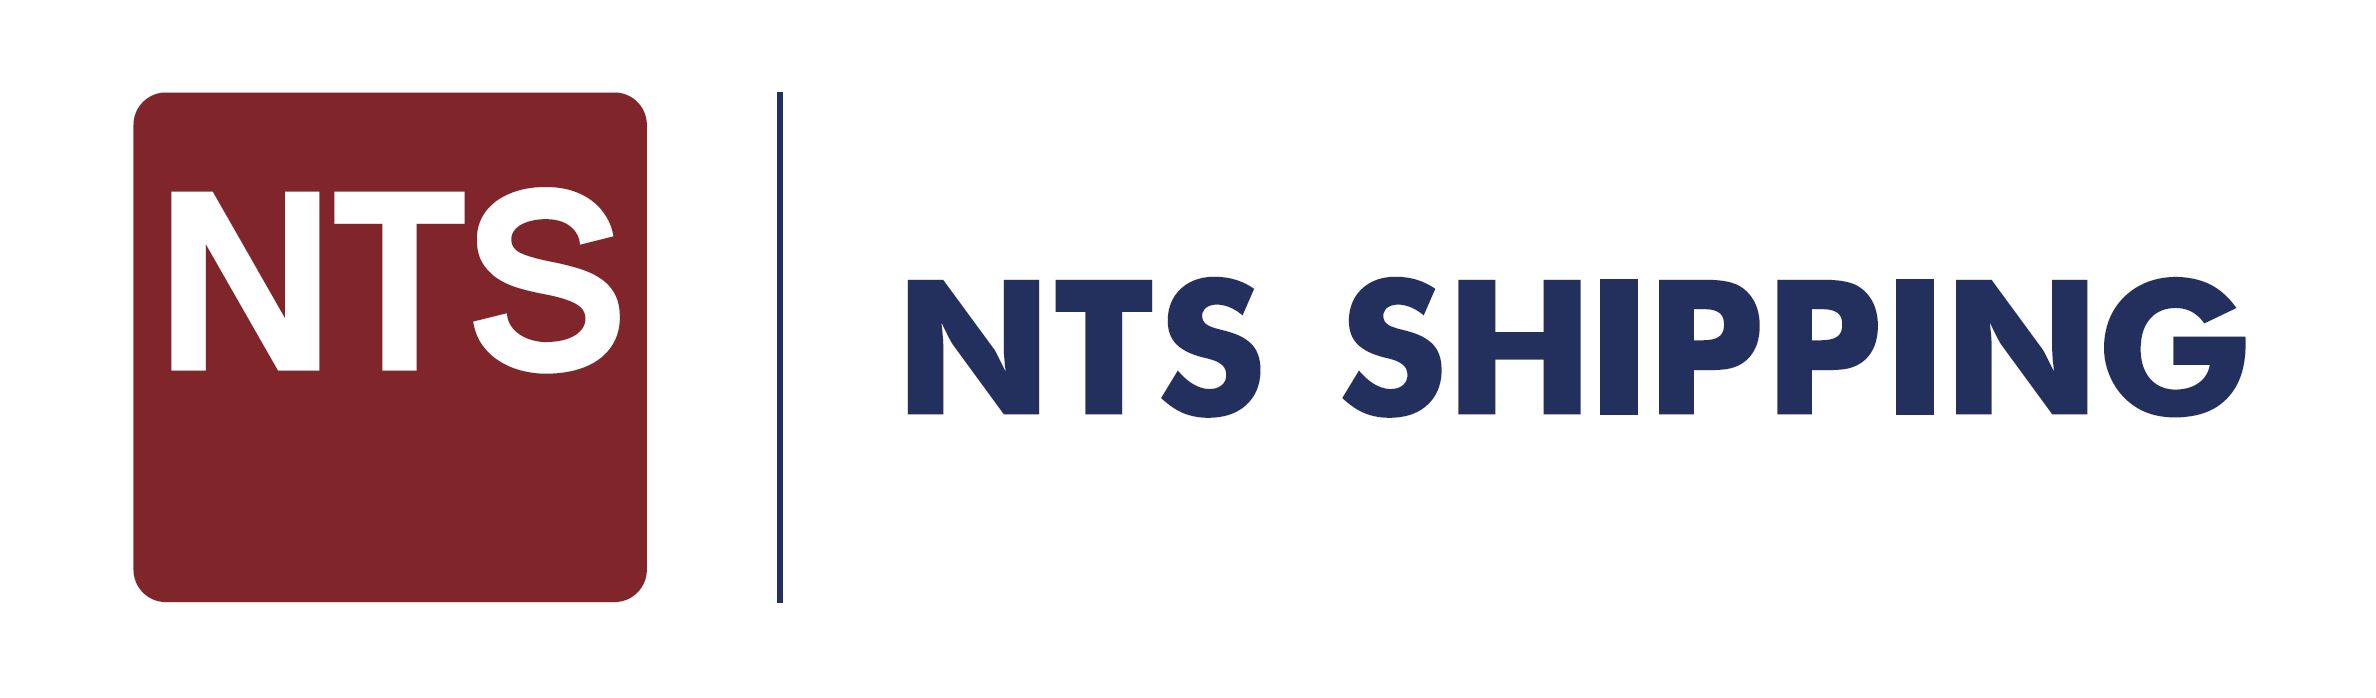 NTS SHIPPING